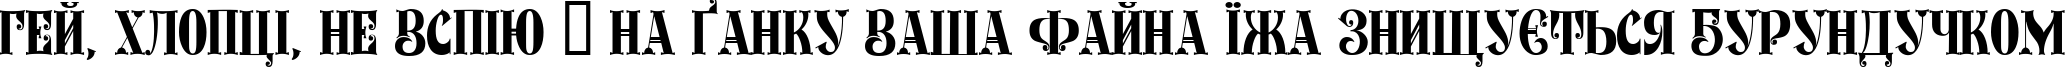 Пример написания шрифтом RozenDecor текста на украинском